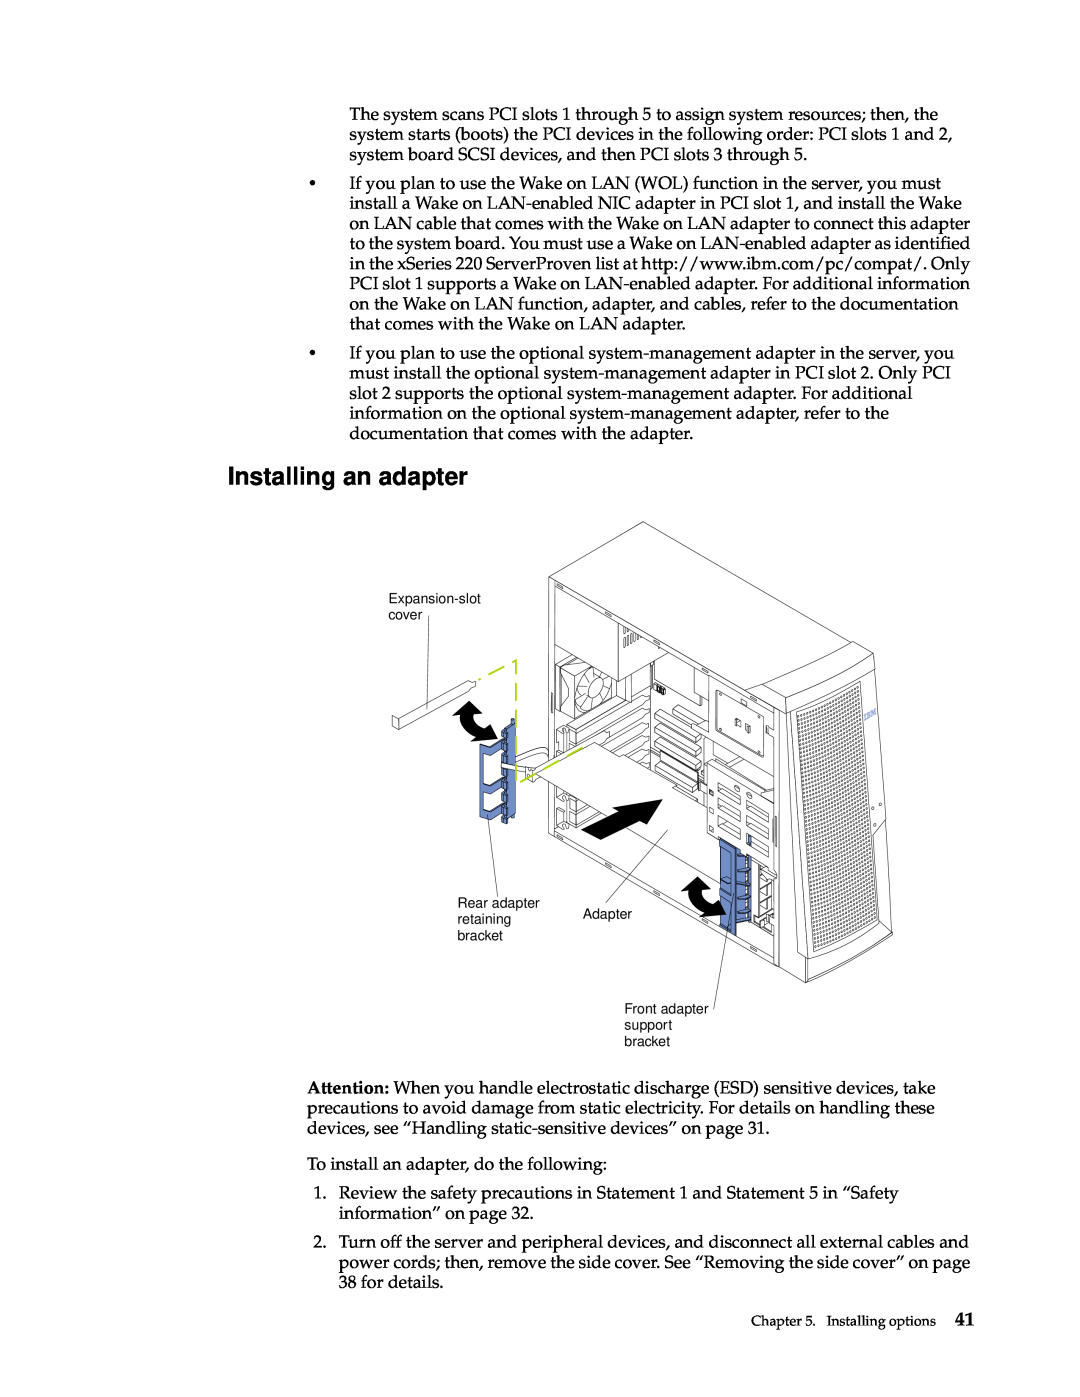 IBM 220 manual Installing an adapter 